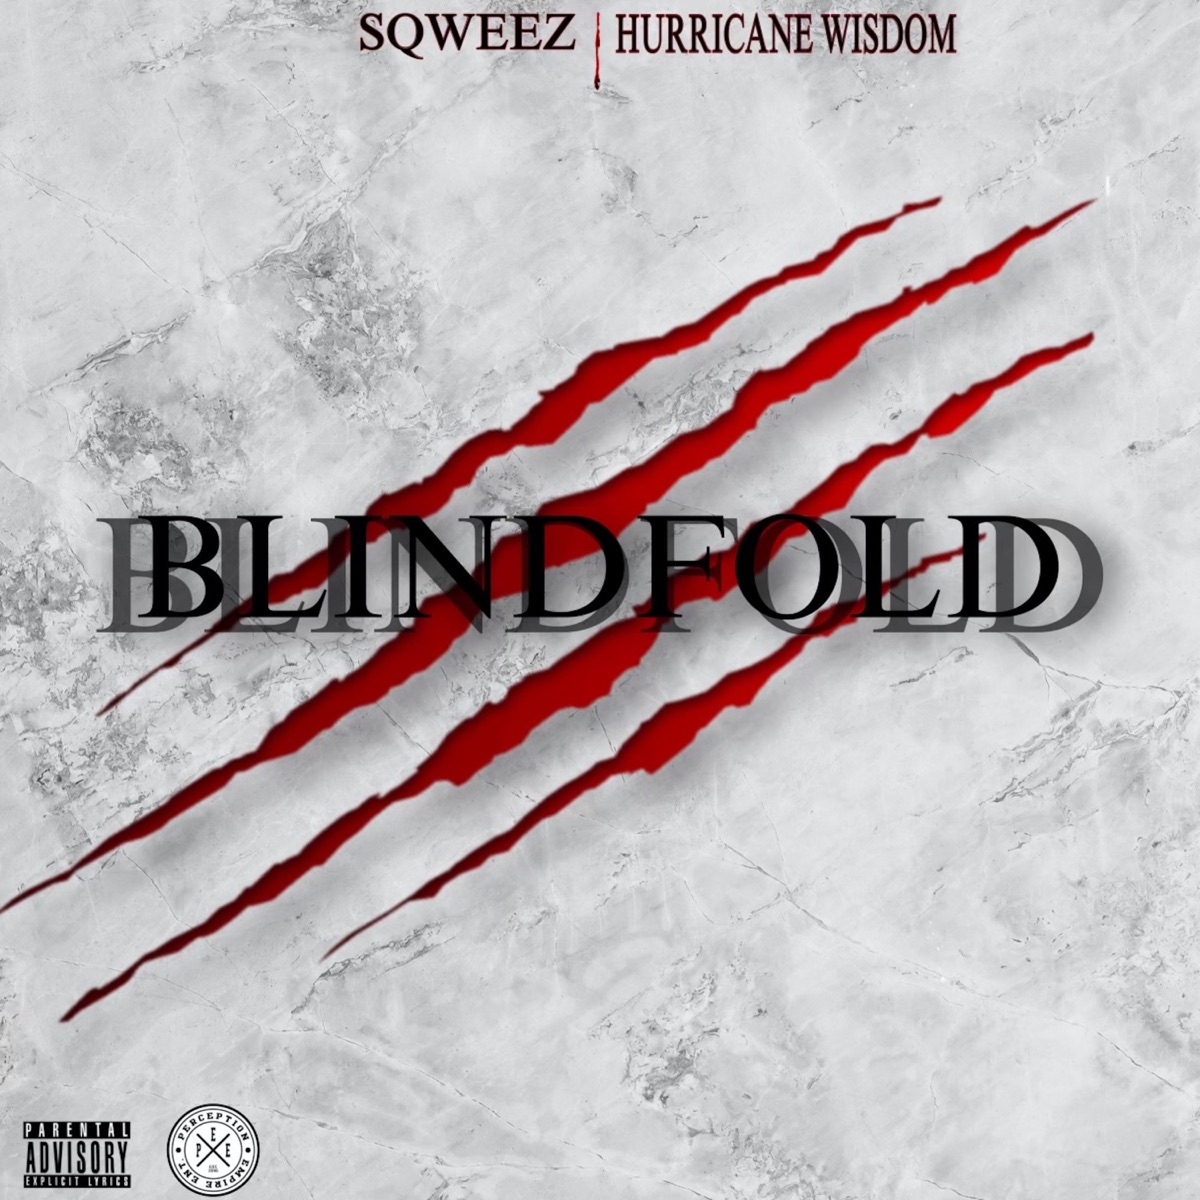 Blindfold (feat. Hurricane Wisdom) - Single - Album by Sqweez - Apple Music